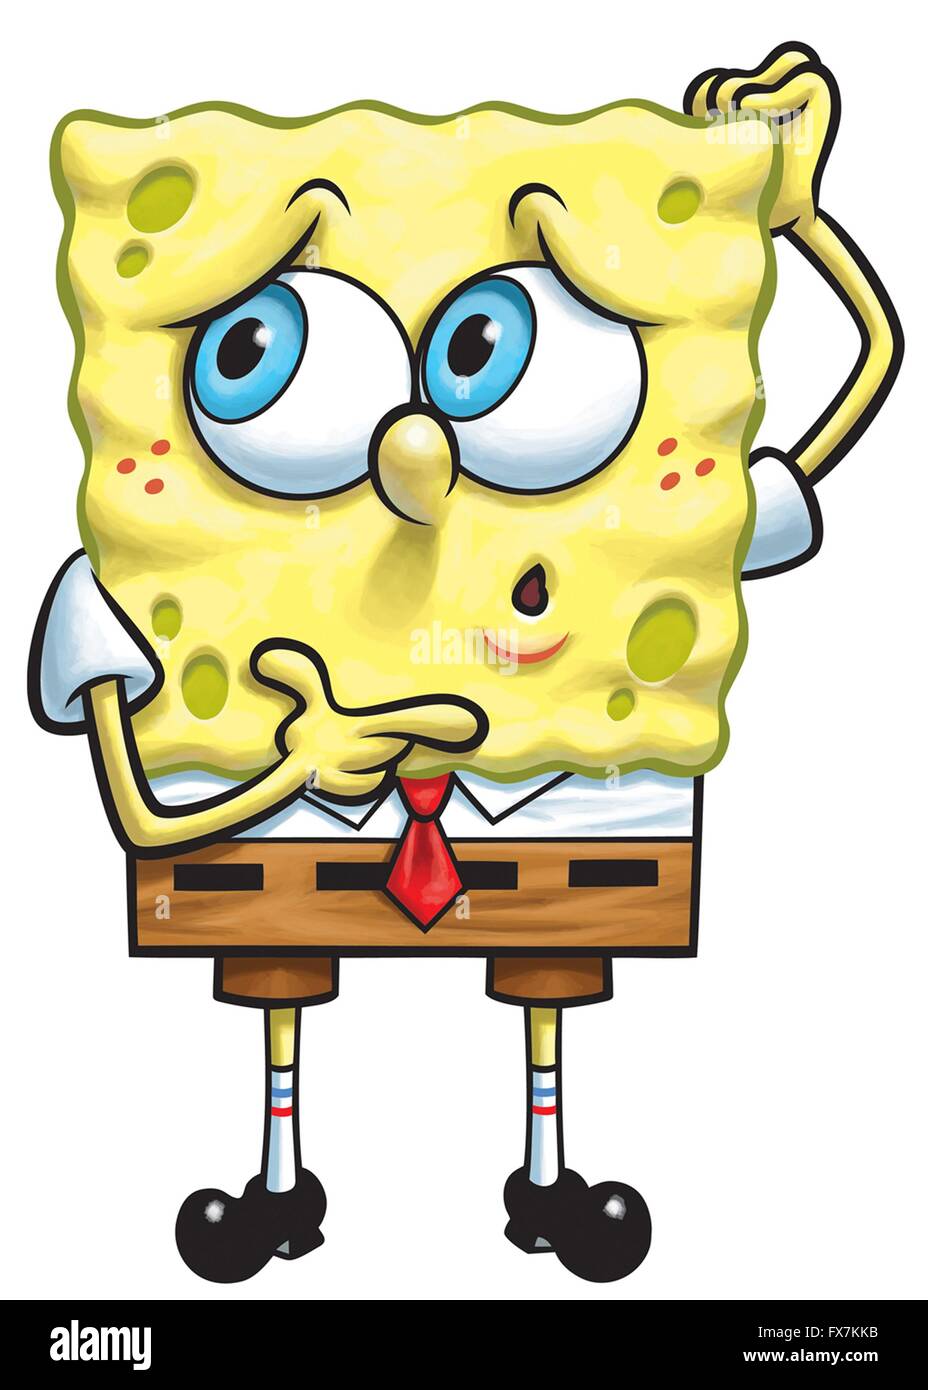 Spongebob squarepants hi-res stock photography and images - Alamy